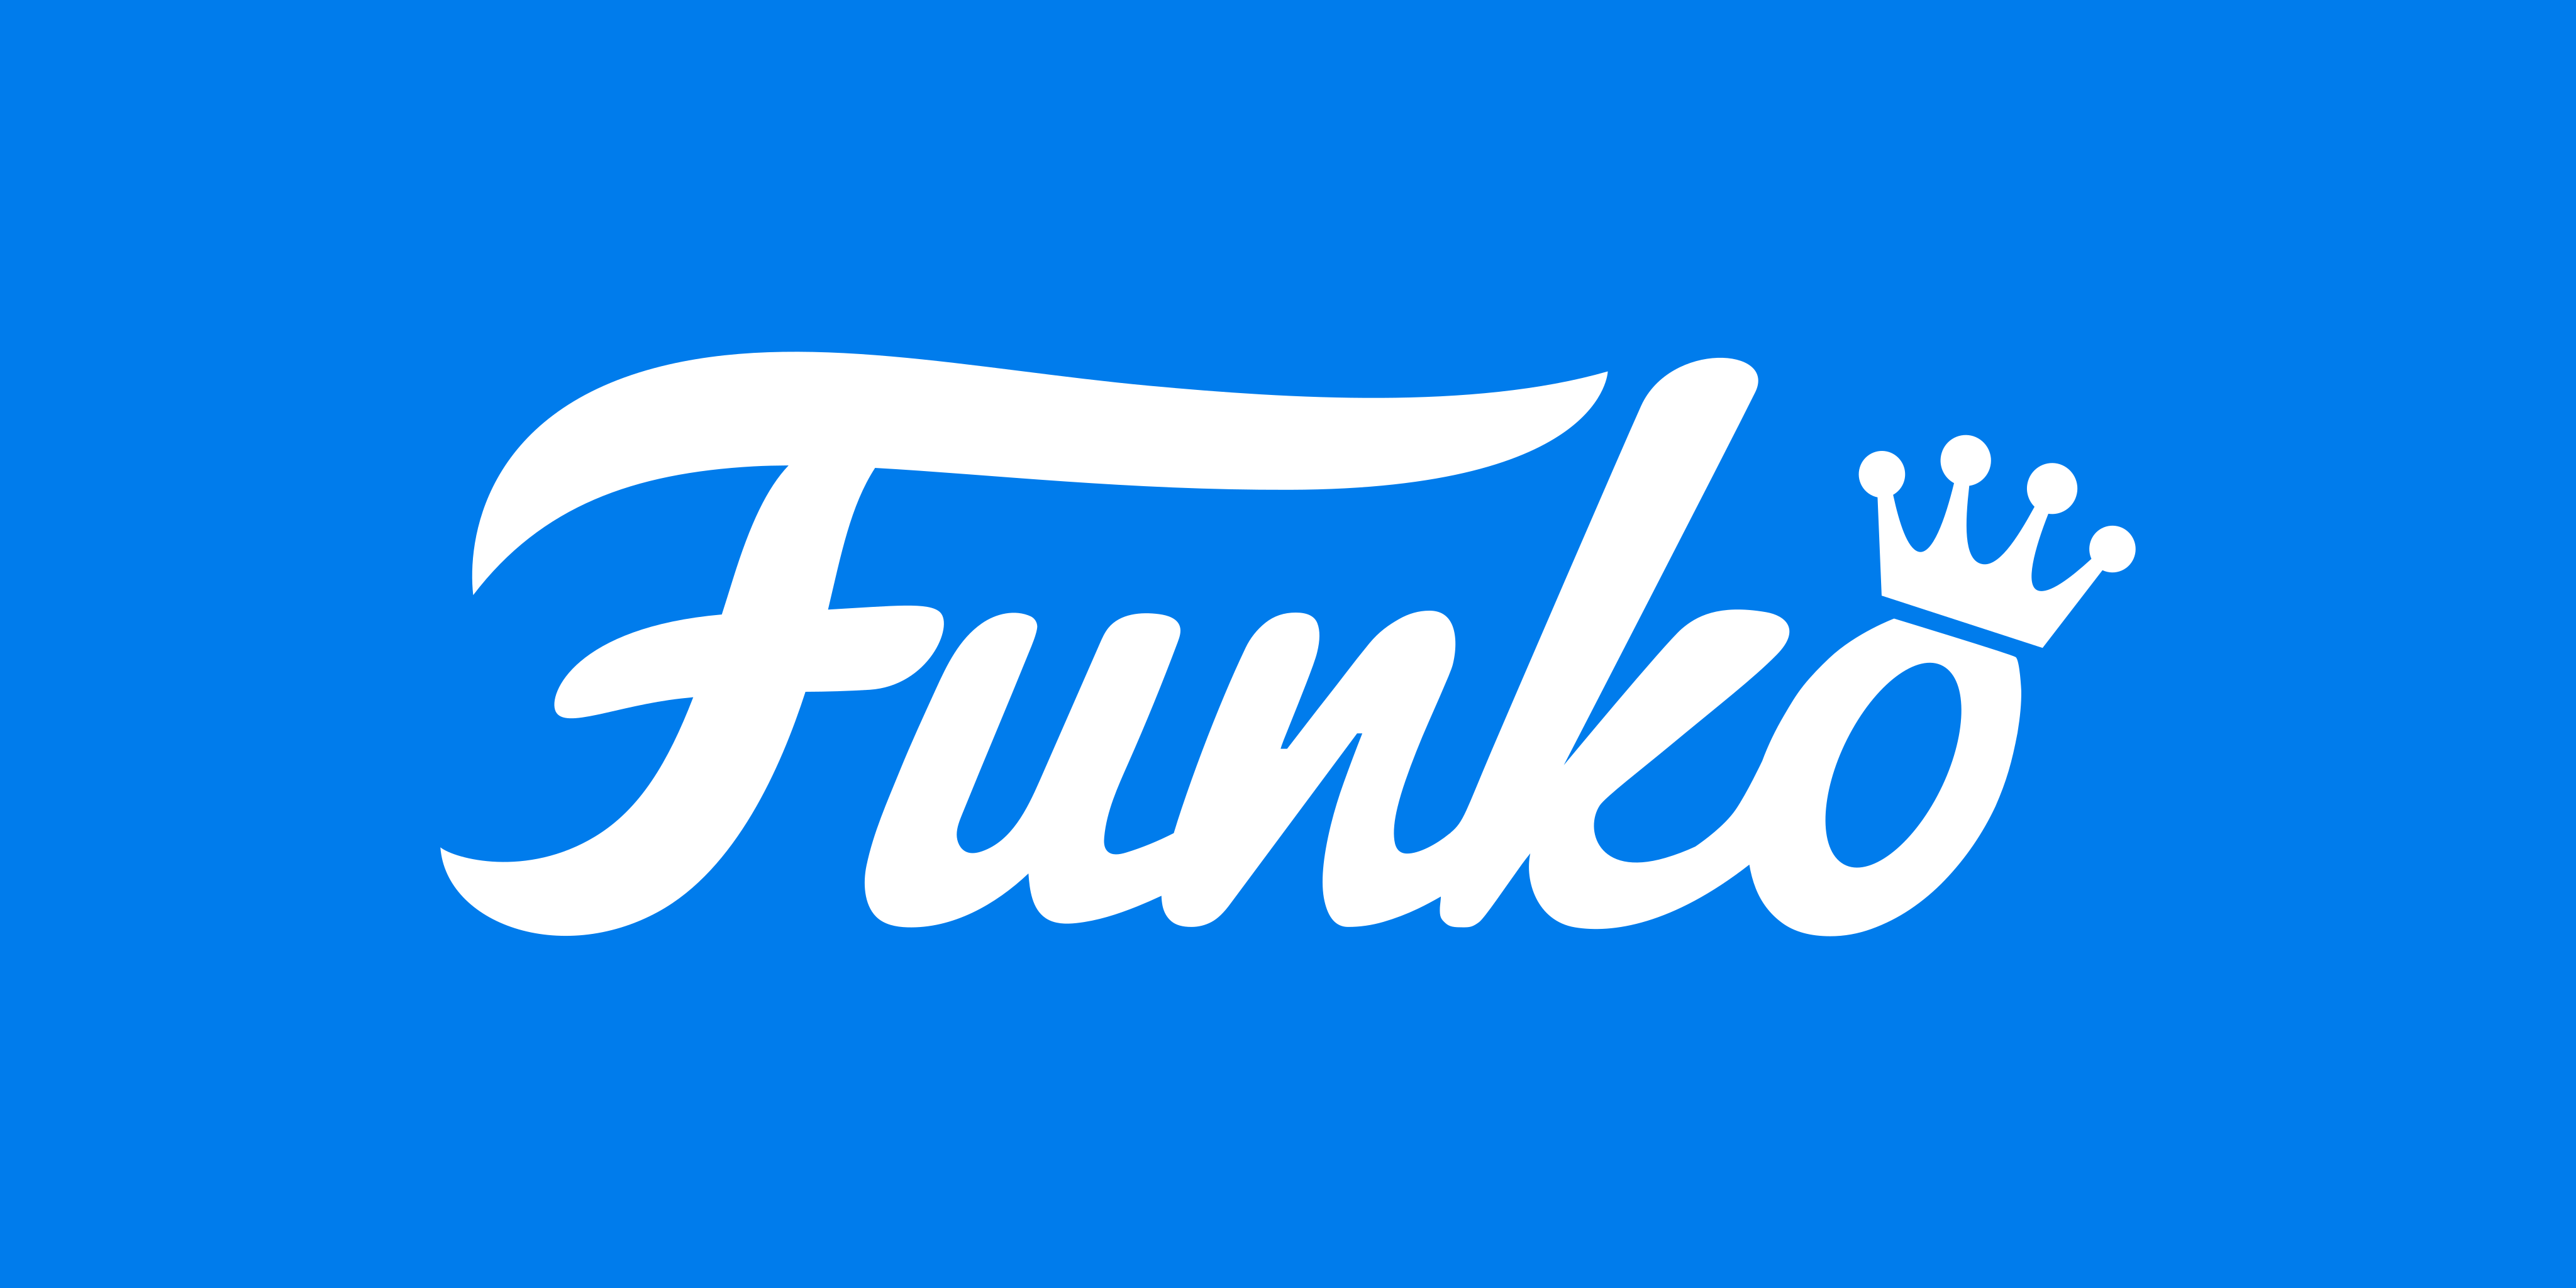 Used to show Funko's logo